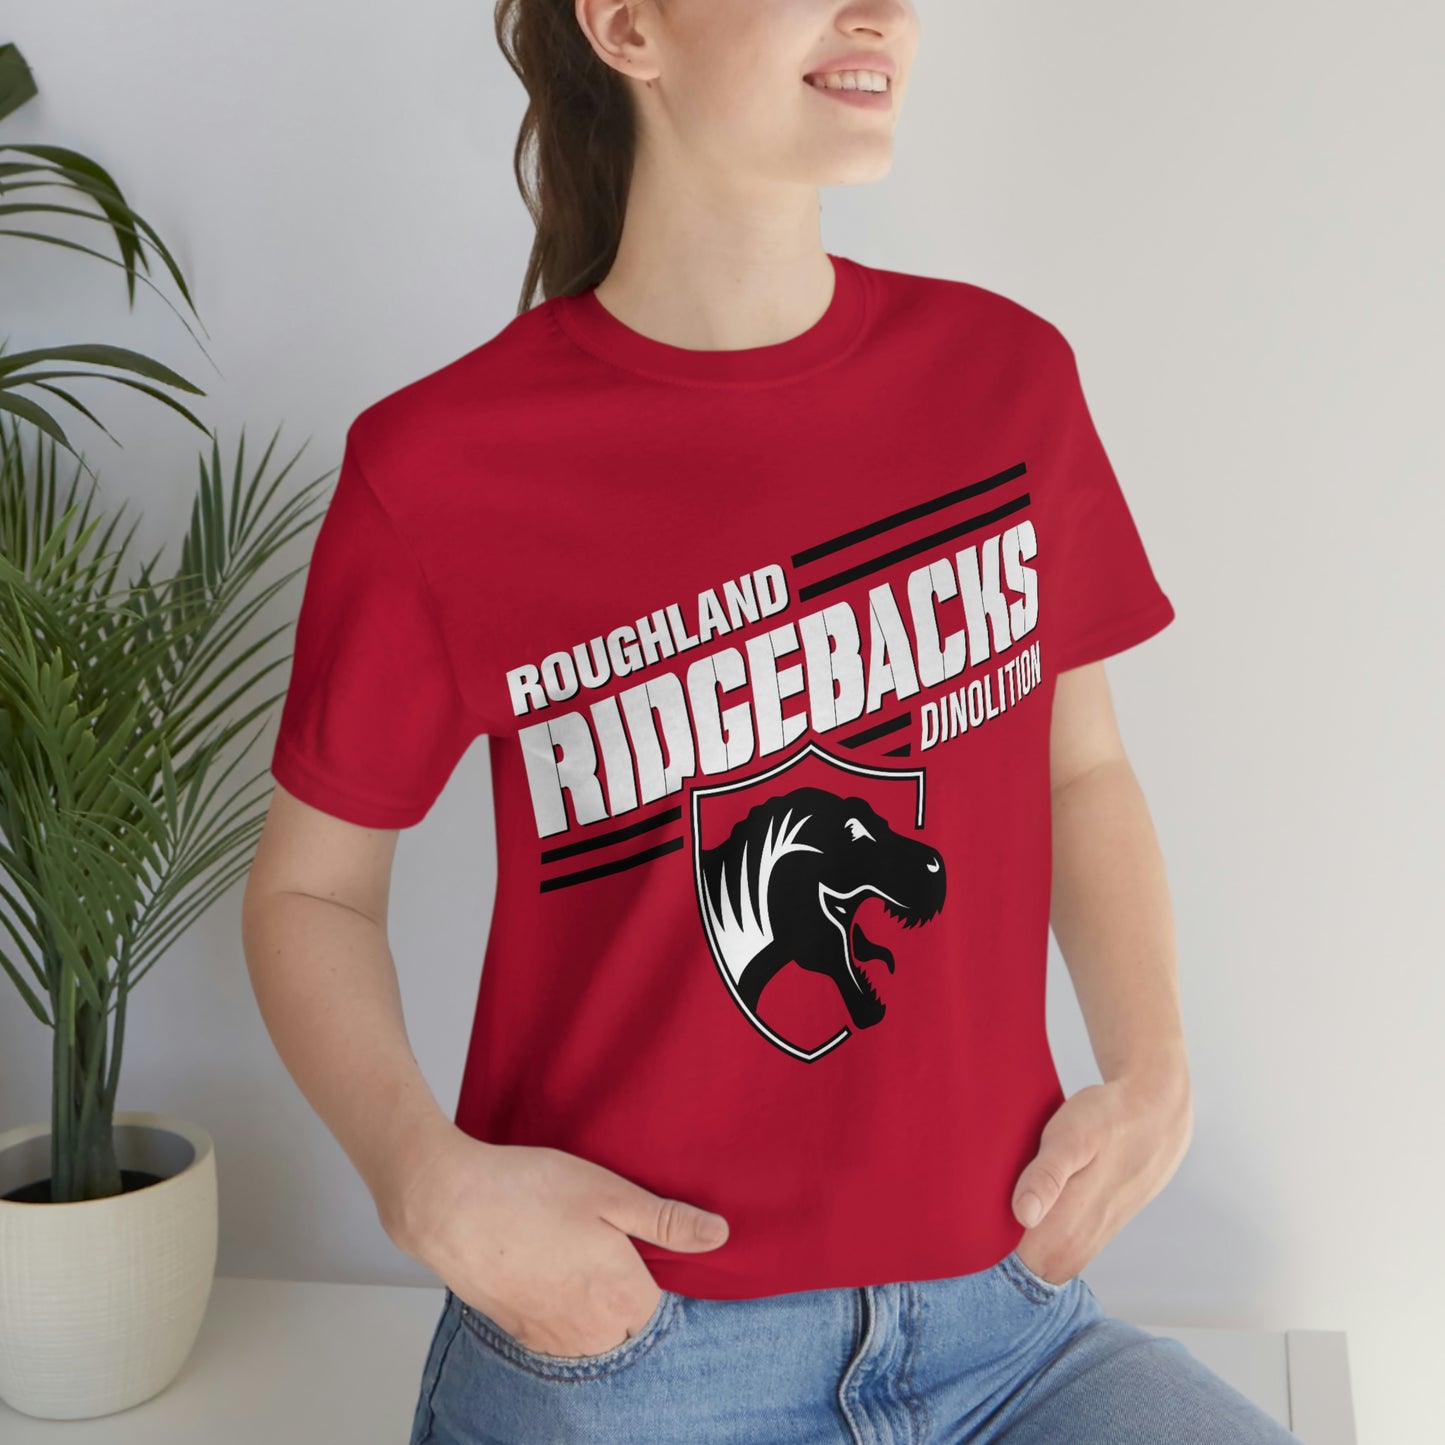 Roughland Ridgebacks Dinolition